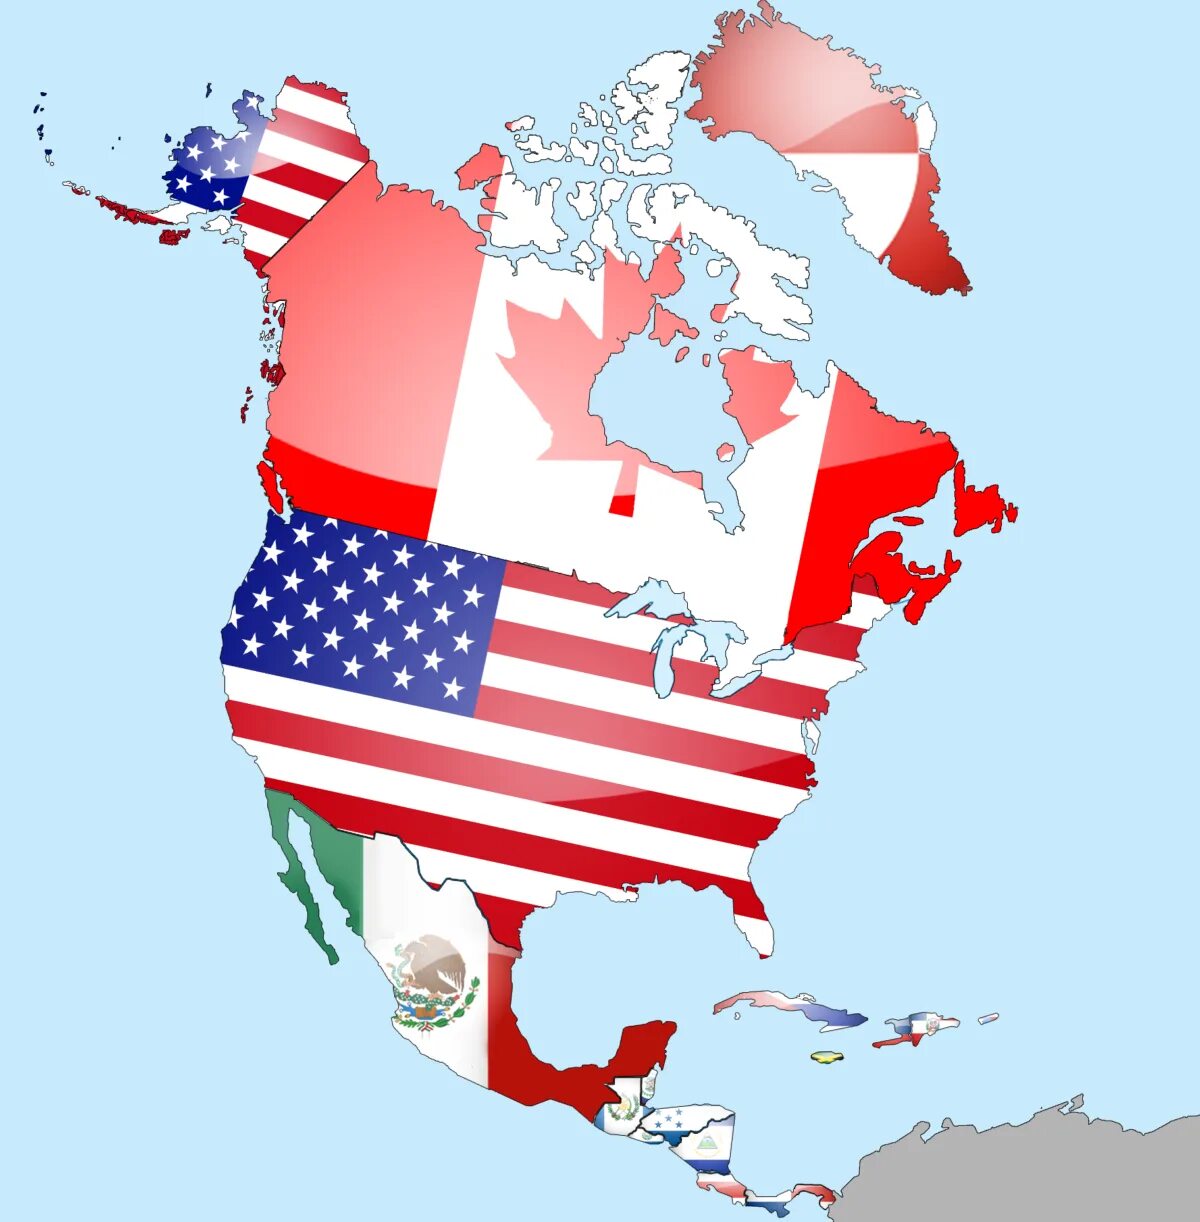 Сайты северная америка. Континент Северная Америка. Нортх Америка. Северная Америка материк США Канада. Североамериканский Континент на карте.